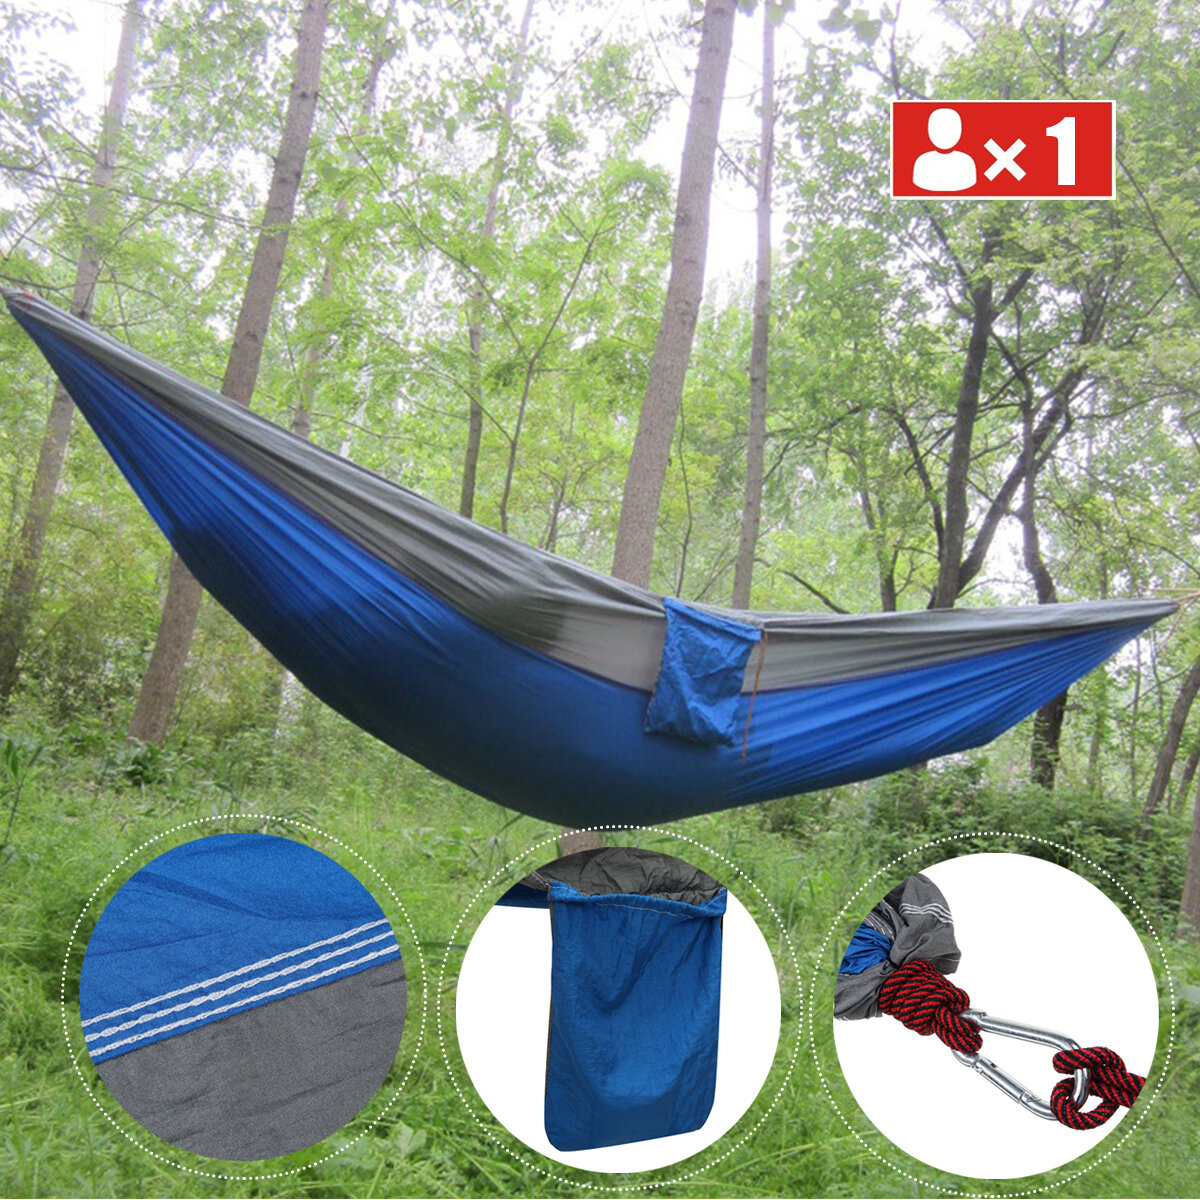 Single People Hanging Swing Bed Camping Hangmat Outdoor Garden Travel with Storage Bag Carabiner Max